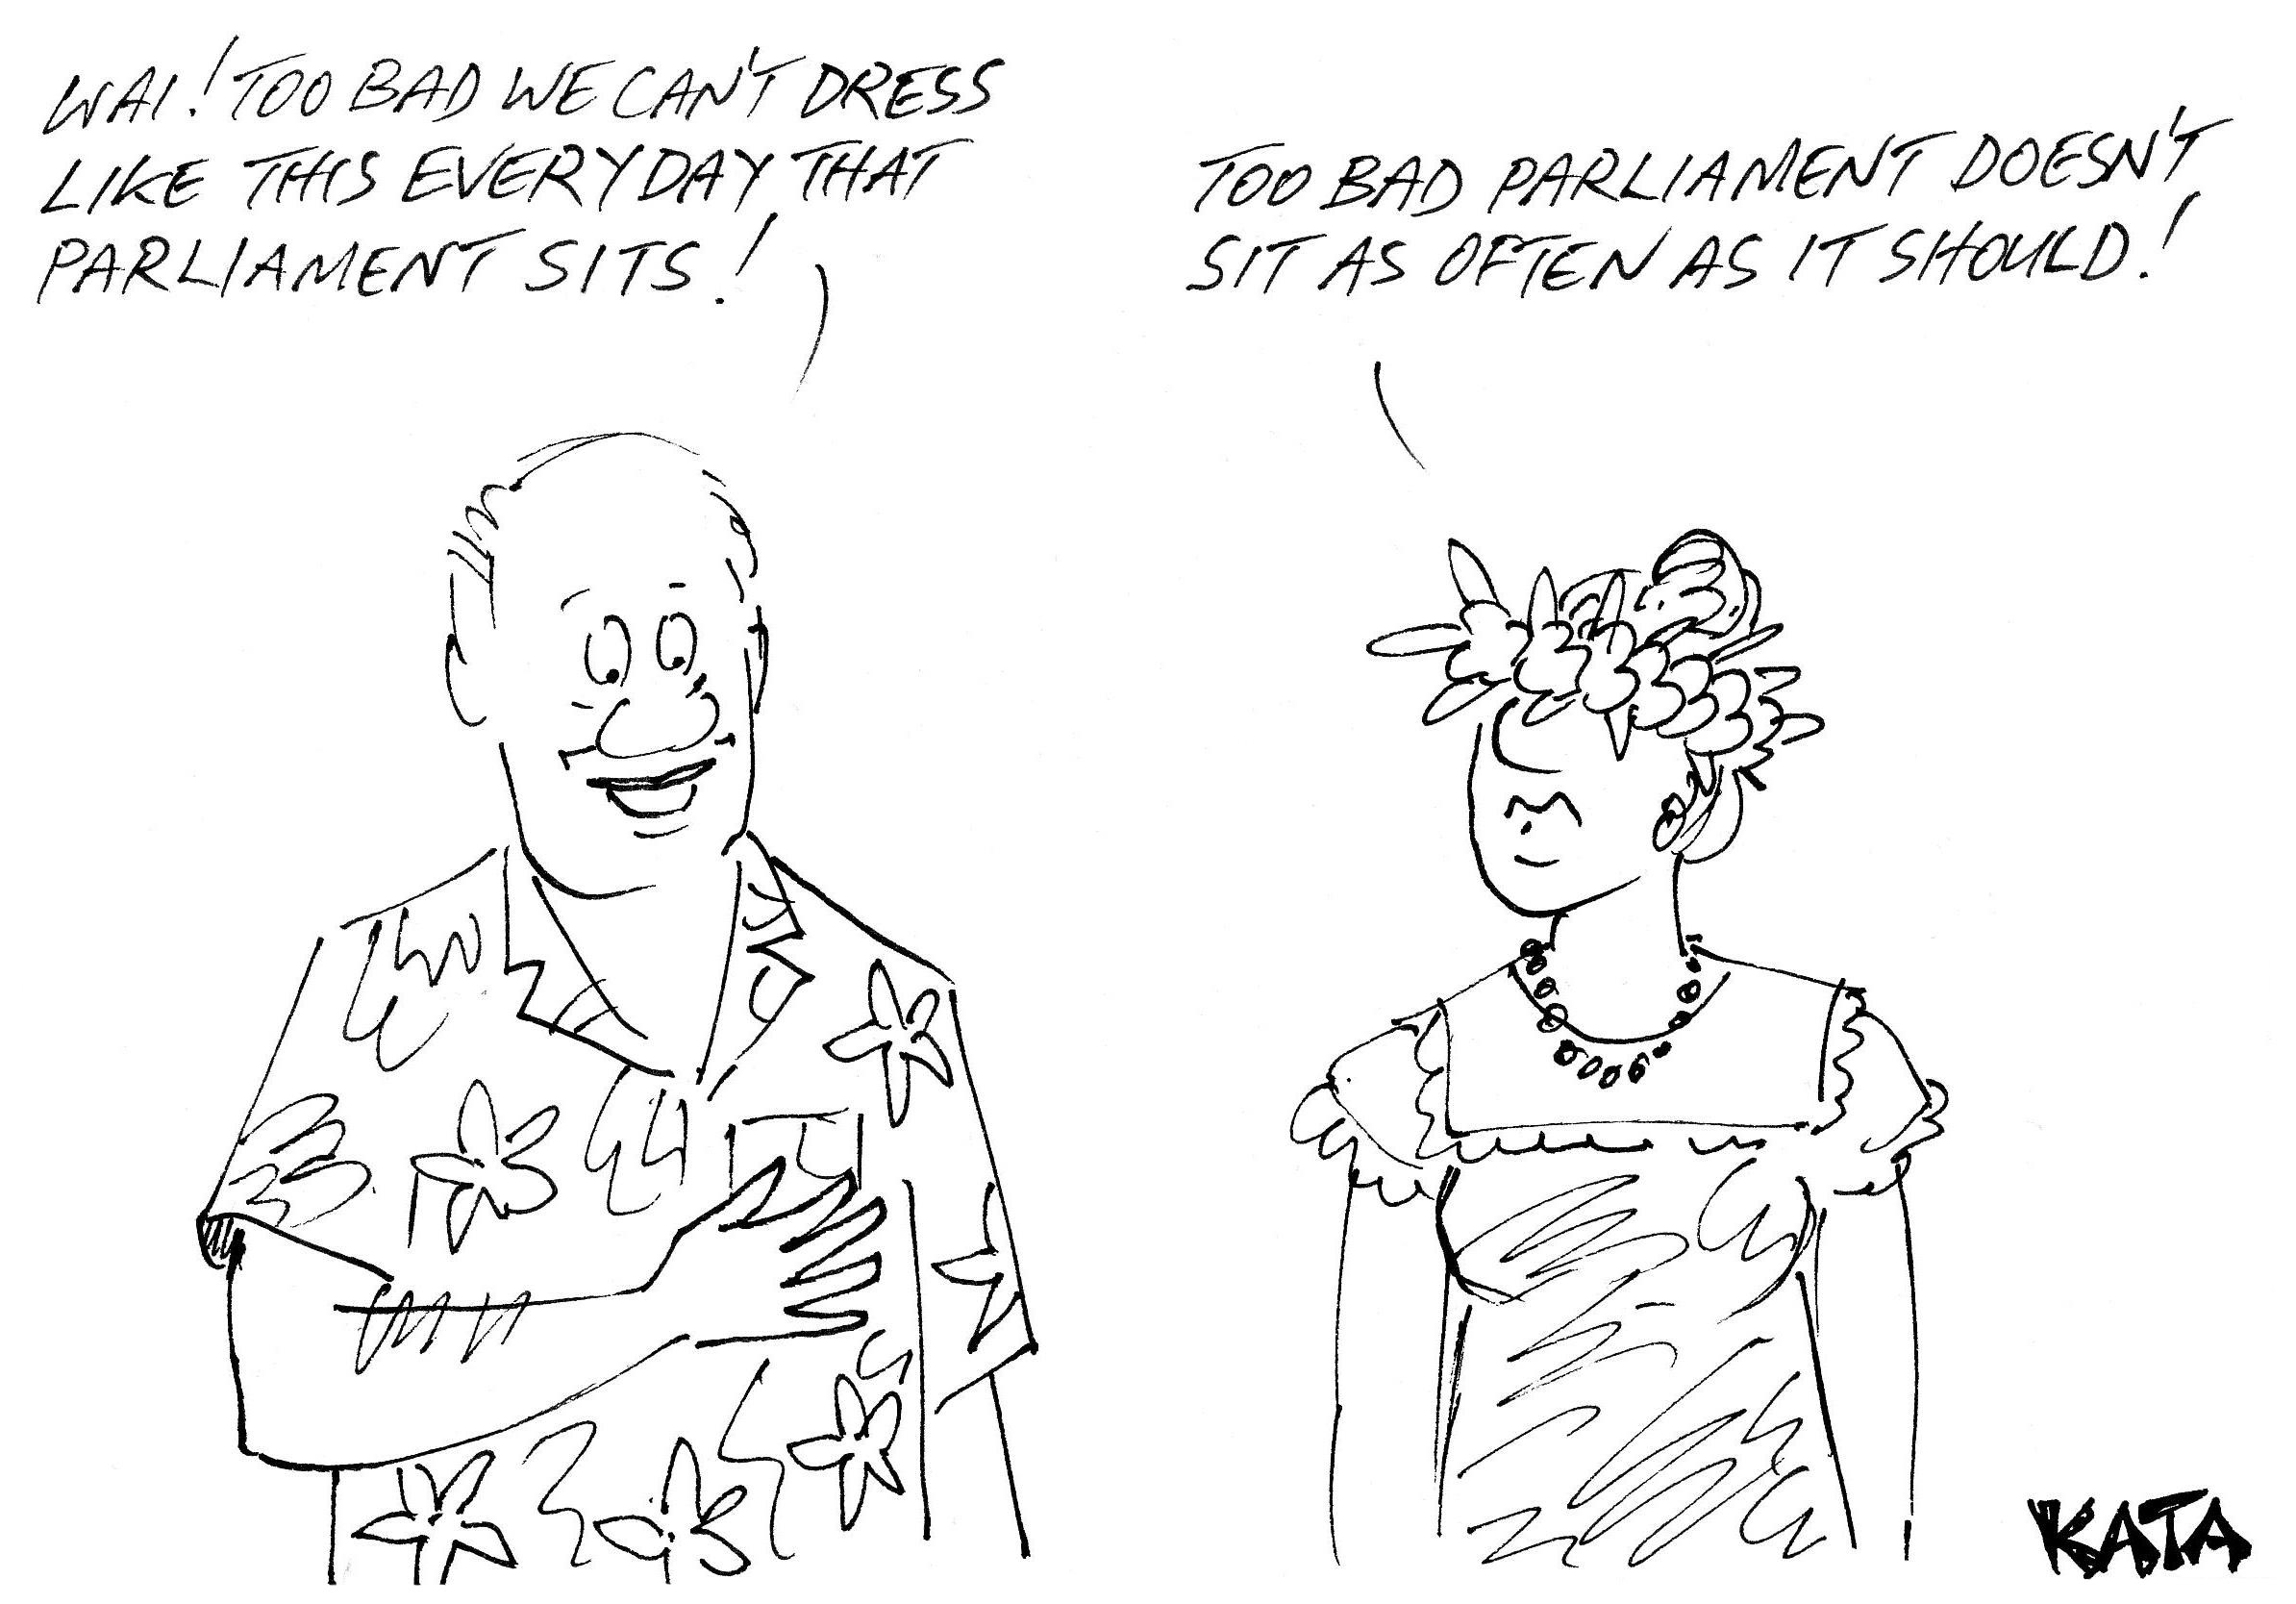 KATA: Parliamentary dress code